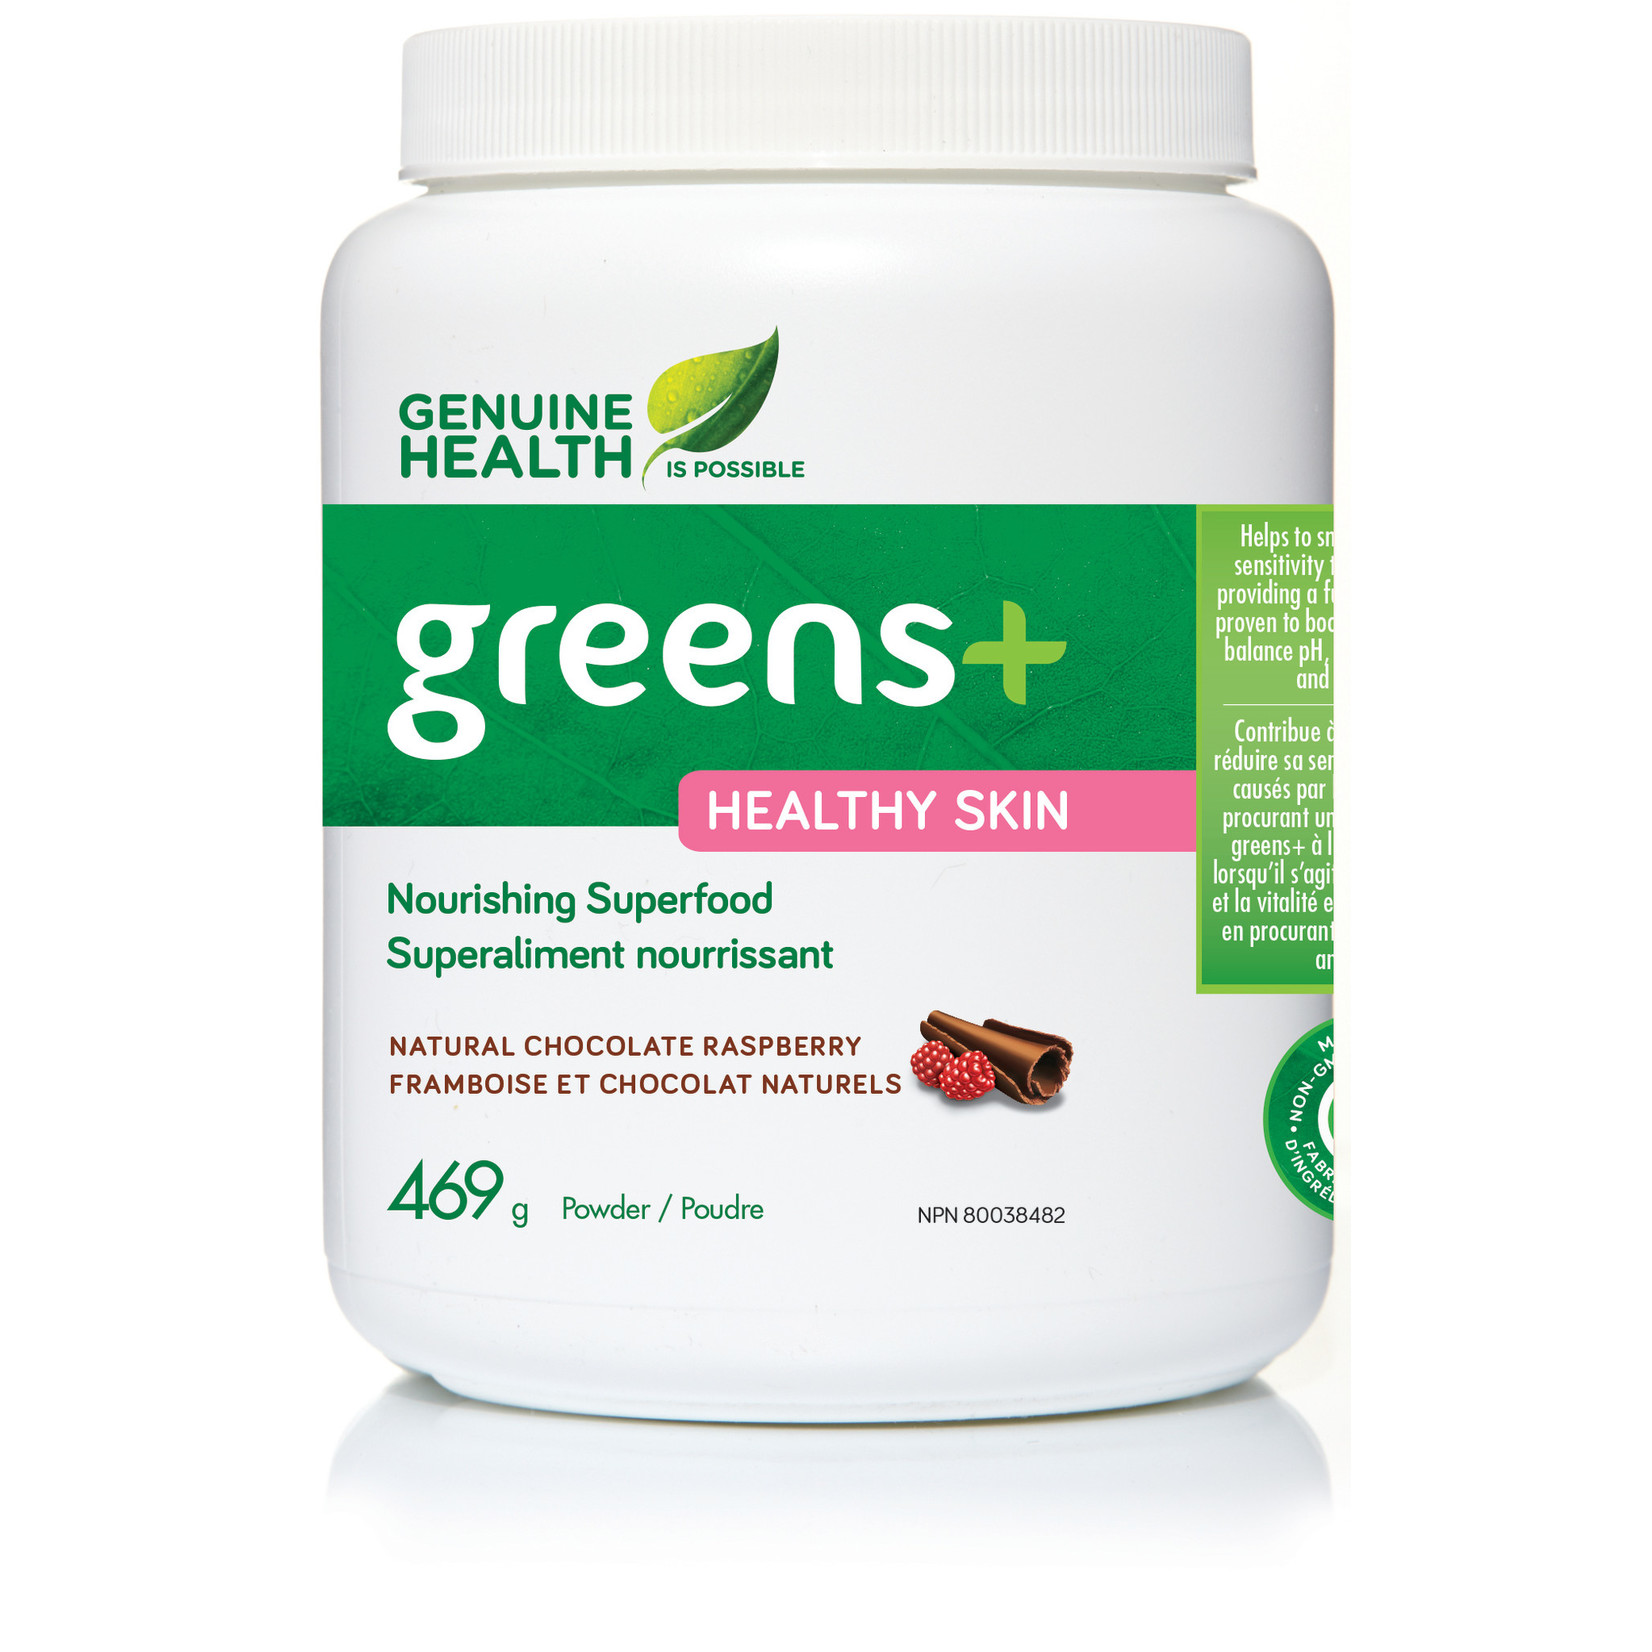 GENUINE HEALTH GENUINE HEALTH GREENS+ HEALTHY SKIN CHOCOLATE RASPBERRY 156G